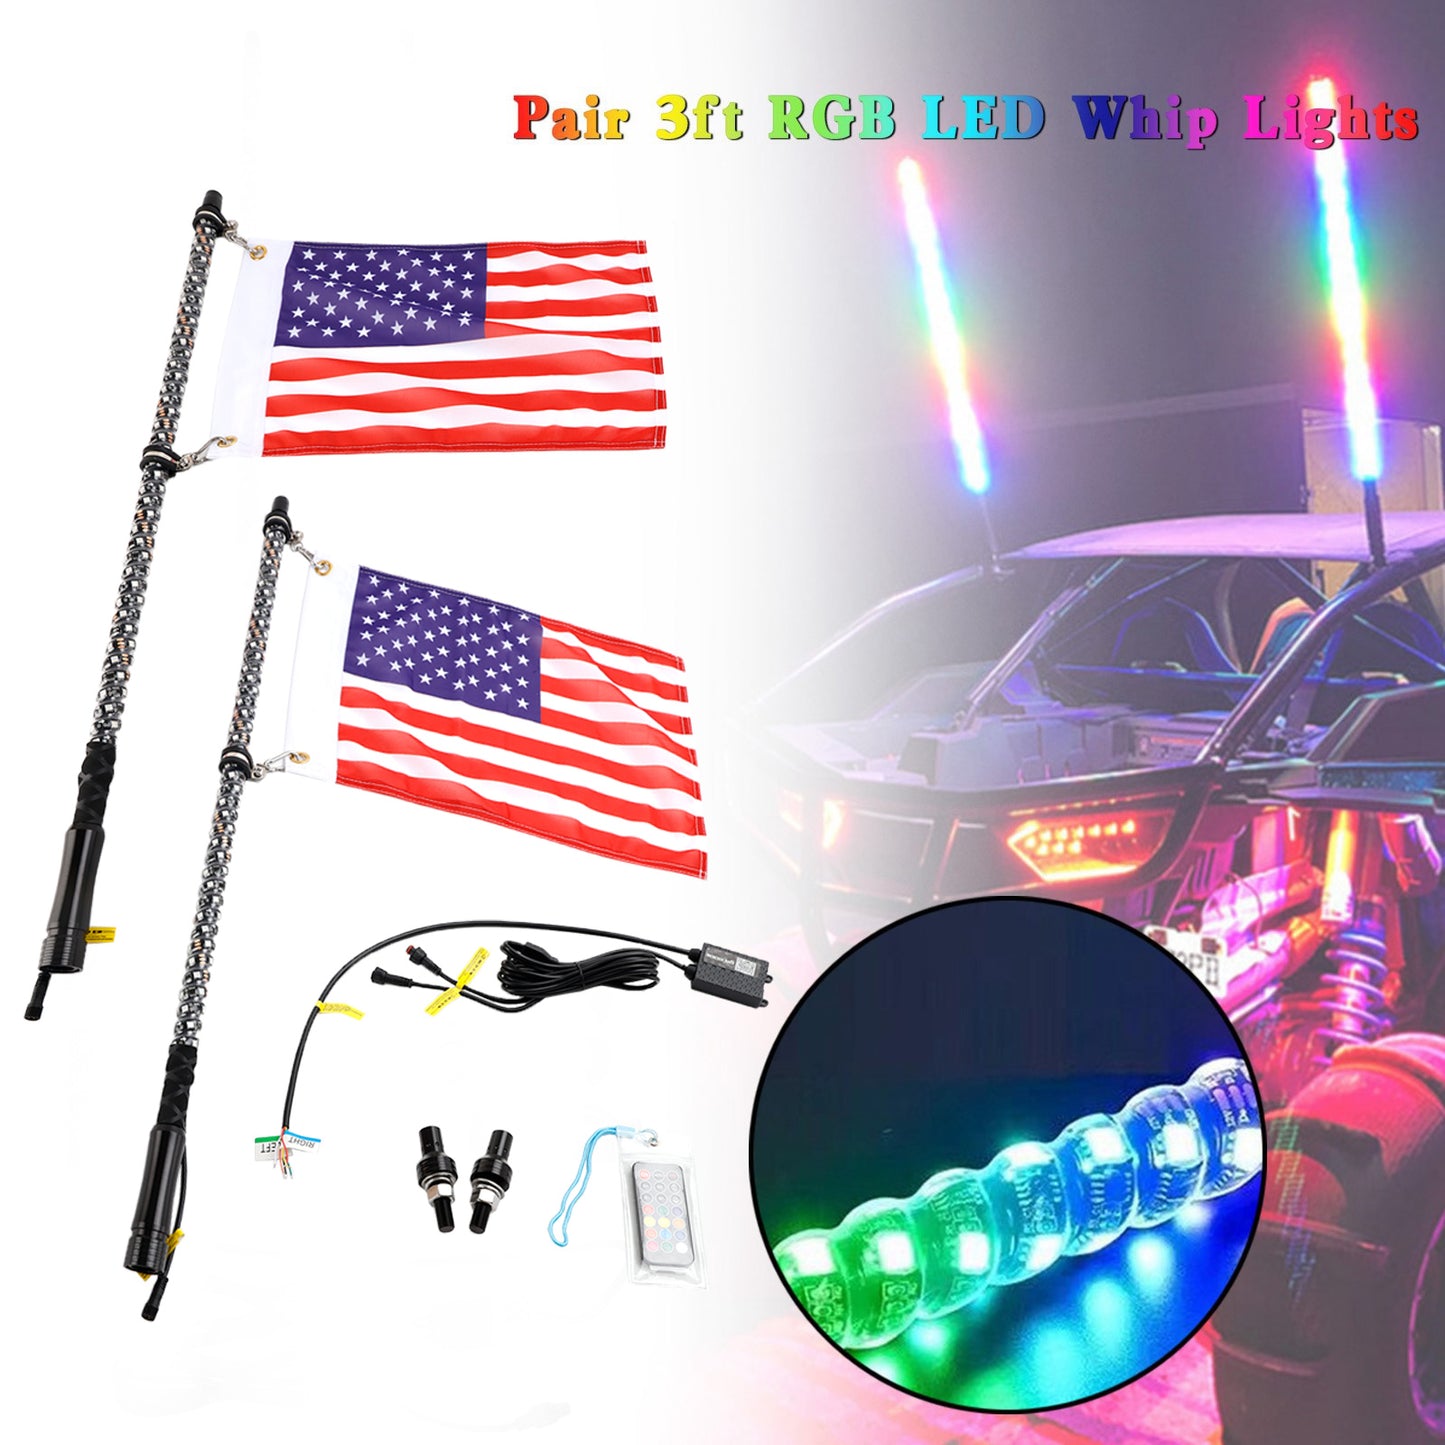 2X 3ft RGB LED Light Whip Antenna W/ Flag Remote Control For Polaris RZR UTV ATV